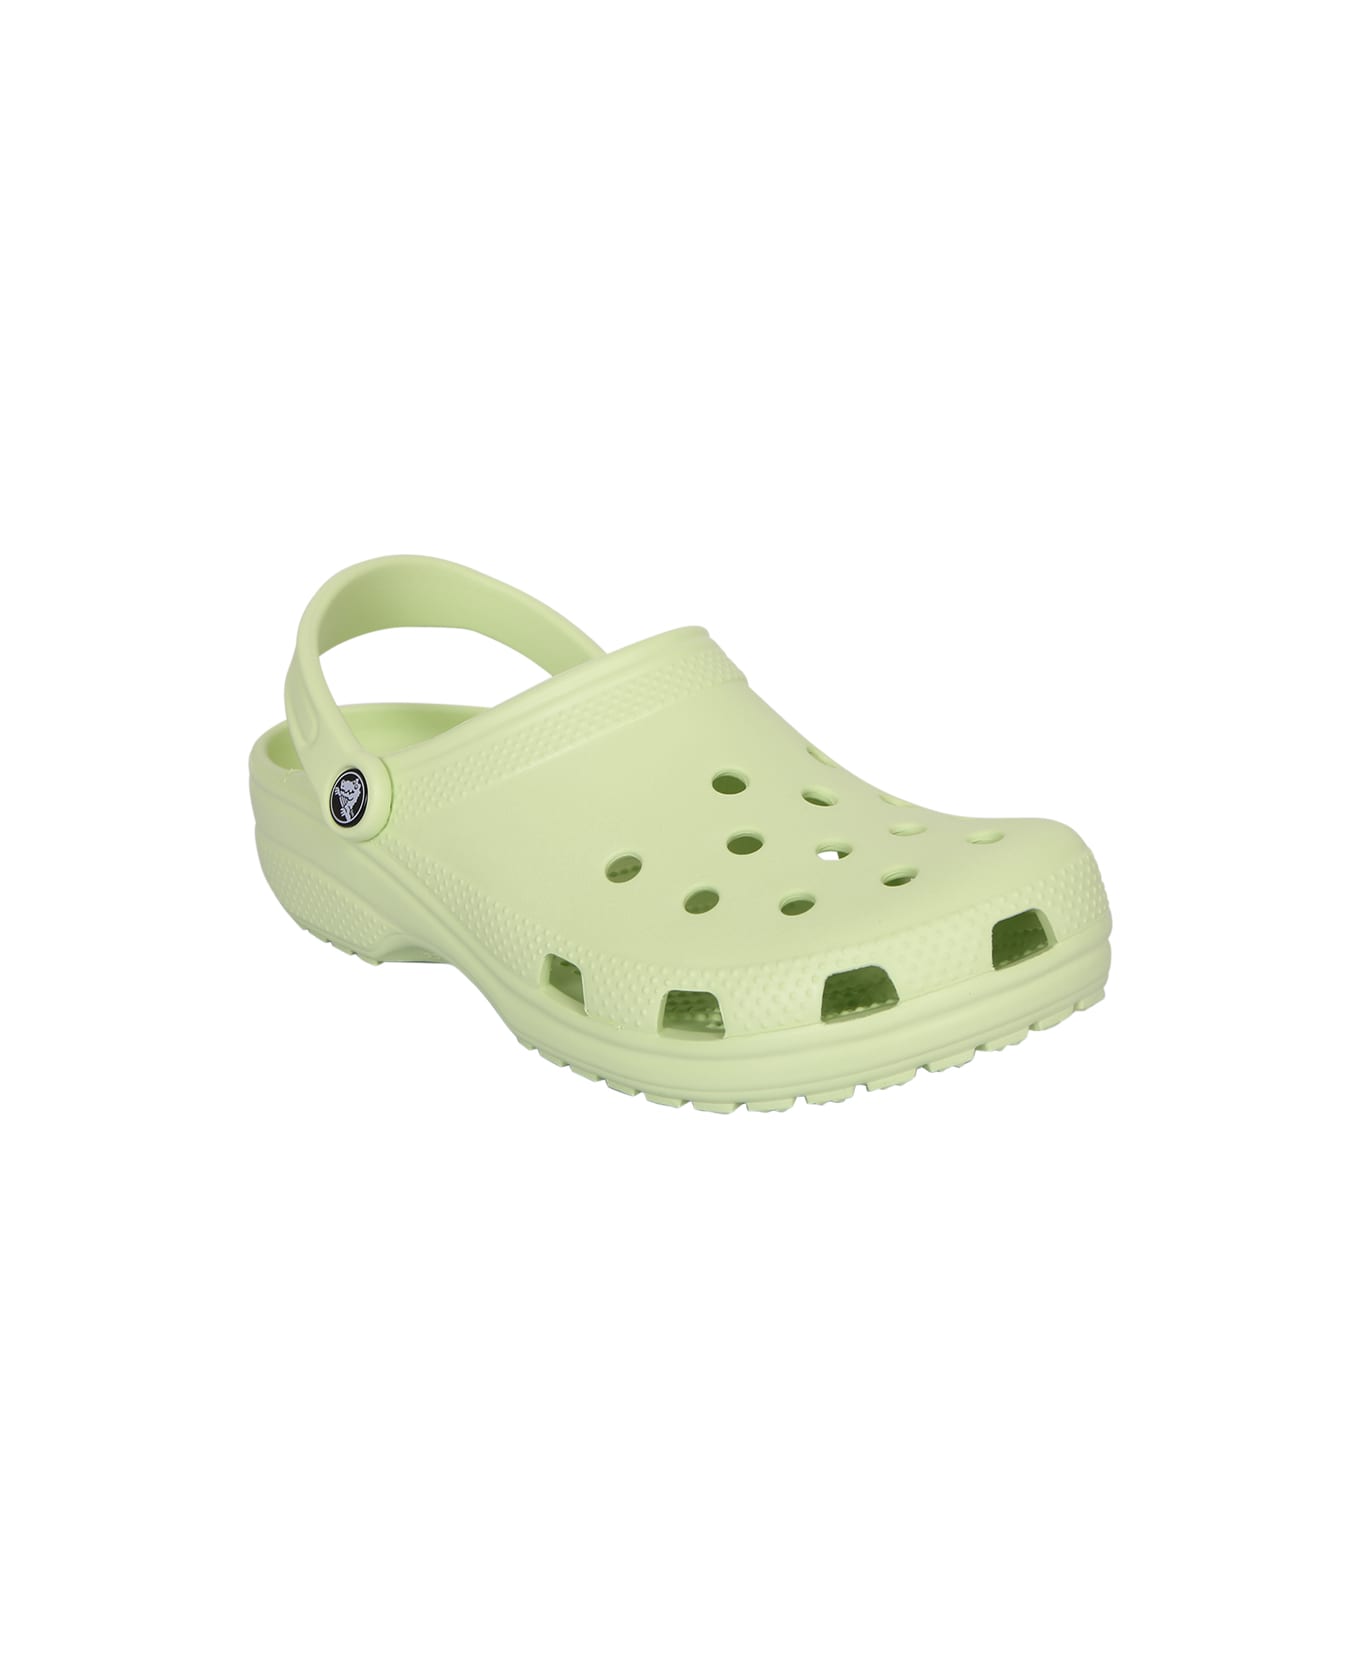 Crocs Cayman Clogs - Green